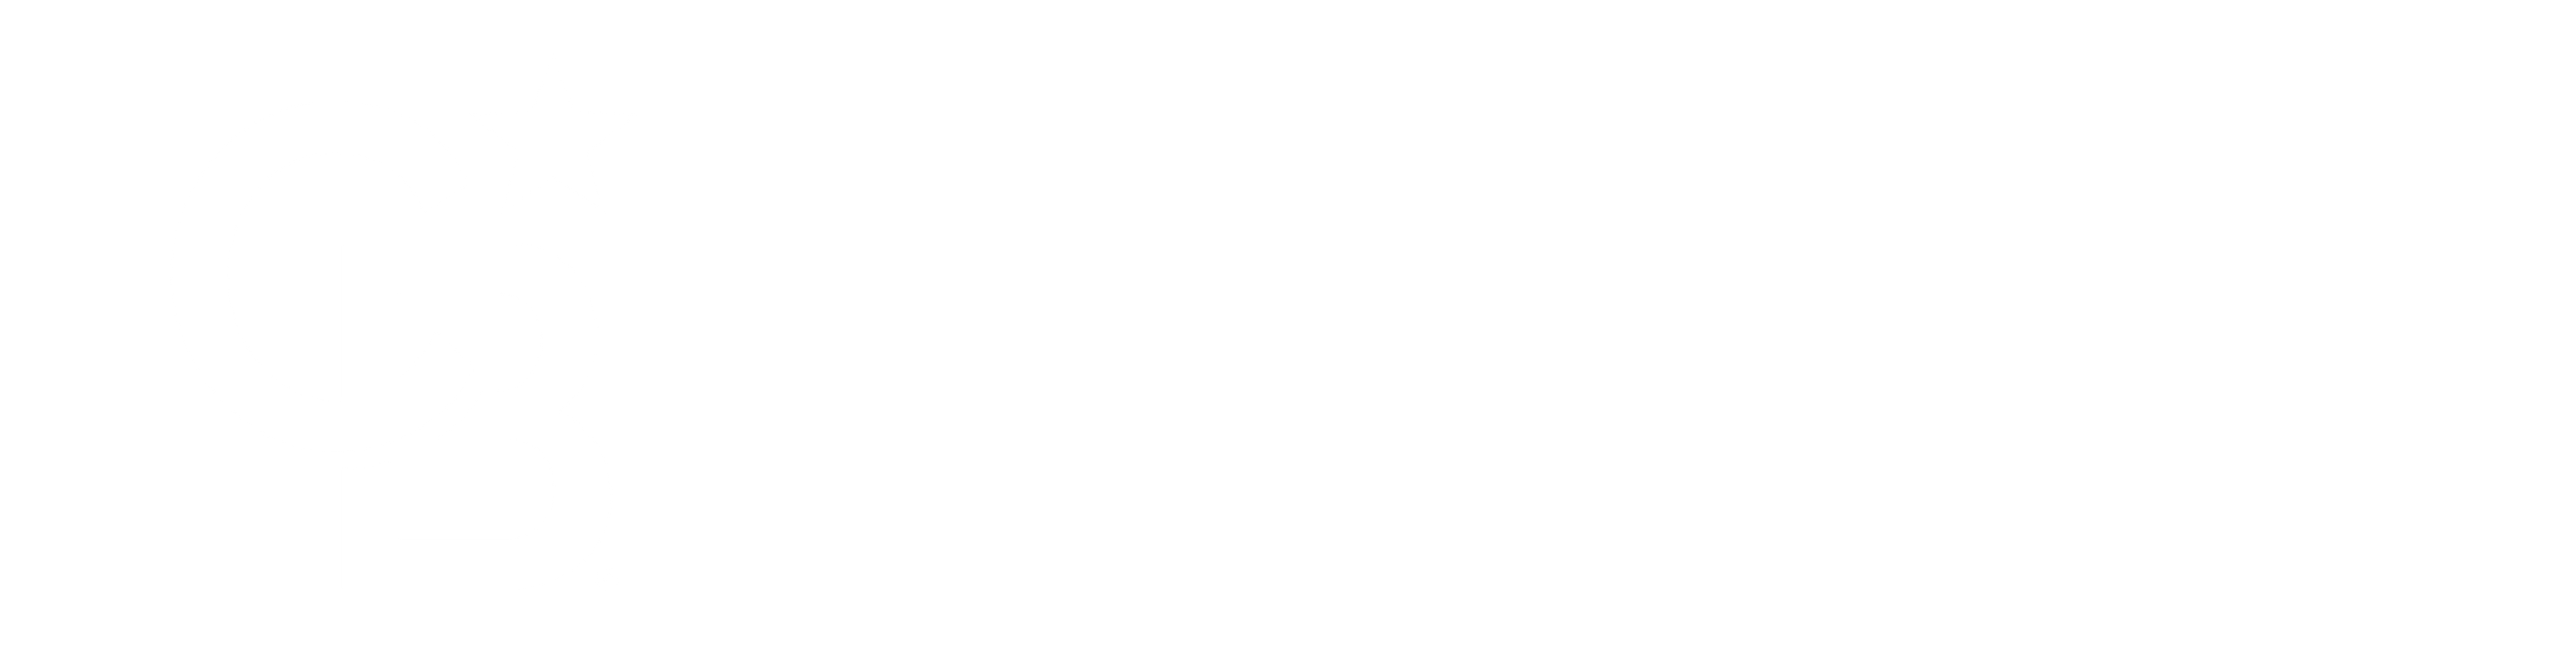 El Dorado Hills & Placerville